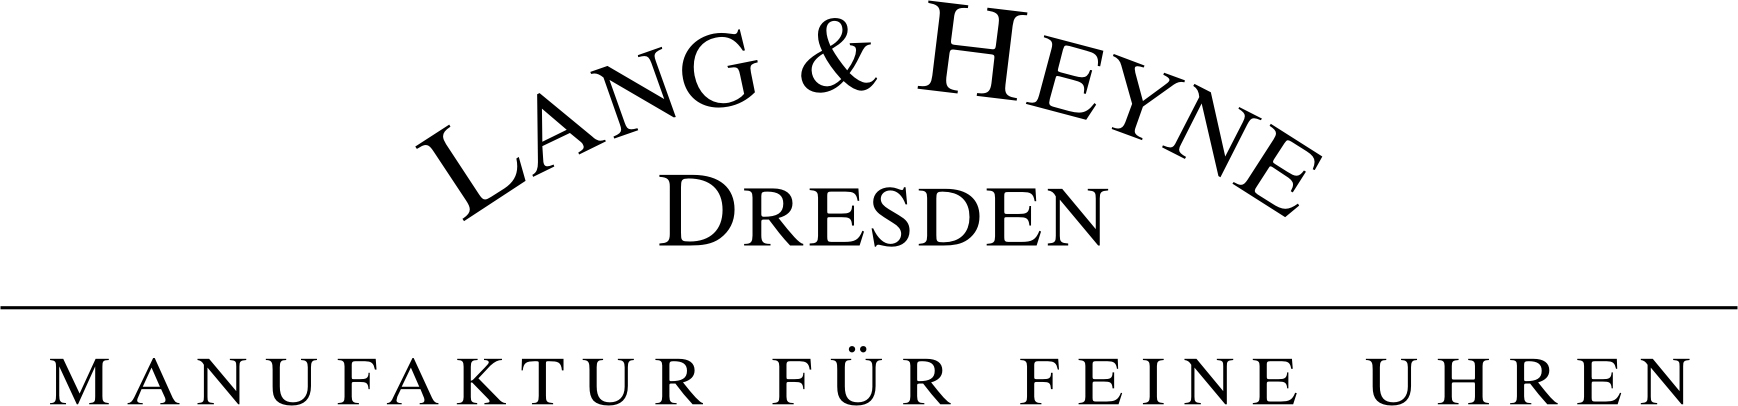 Lang & Heyne logo